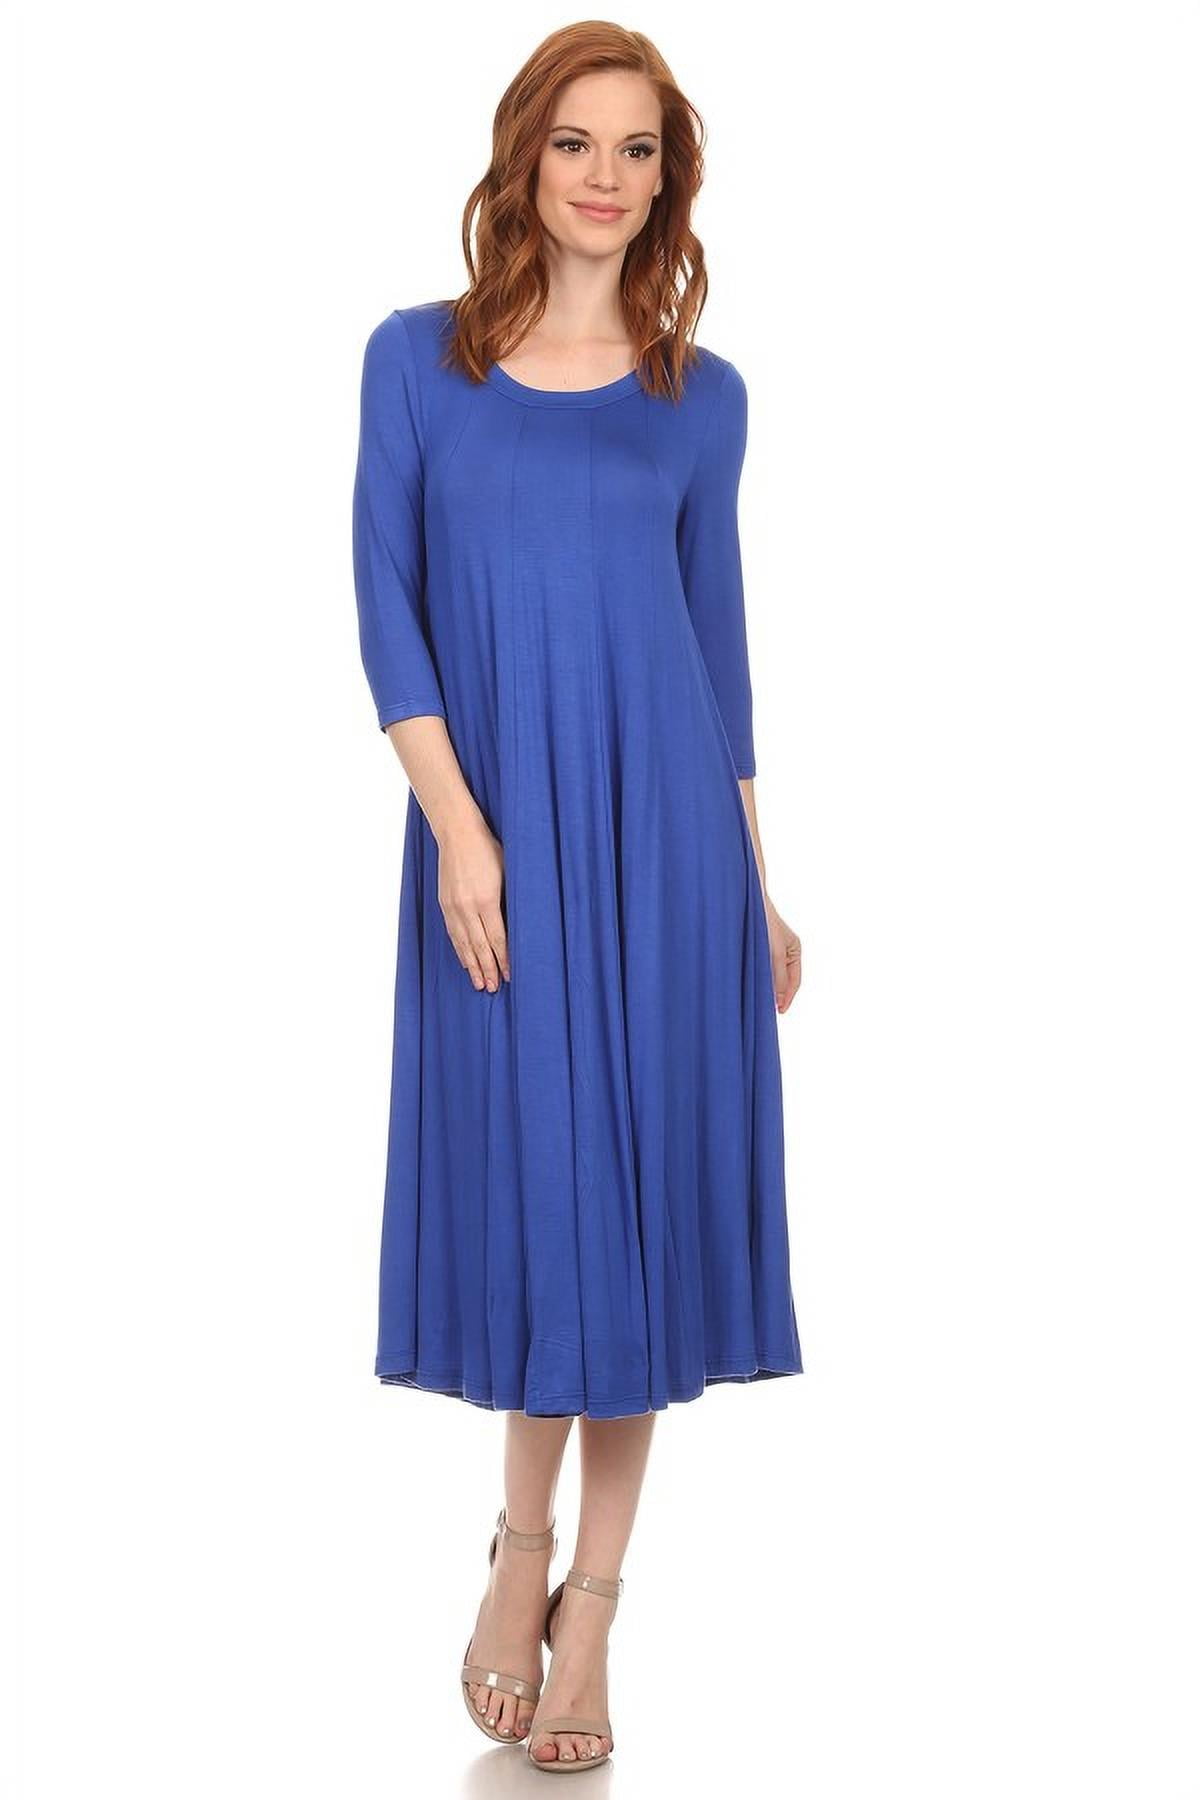 Women's Casual 3/4 sleeves solid Maxi Long dress - Walmart.com